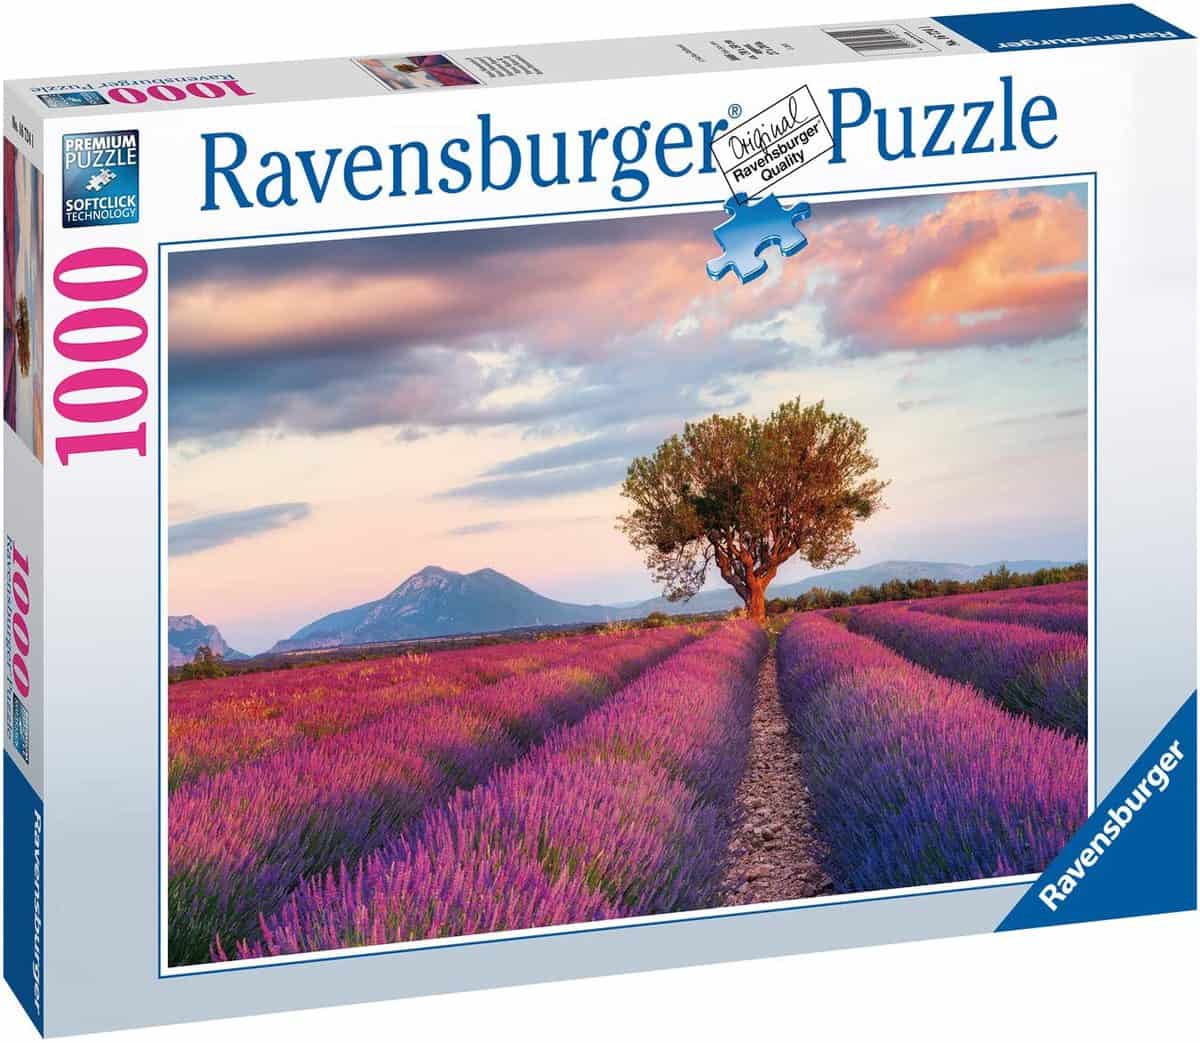 Ravensburger Lavendelfeld in der goldenen Stunde (1.000 Teile) - für 8,99 € [Prime/MM Abholung] statt 12,99 €